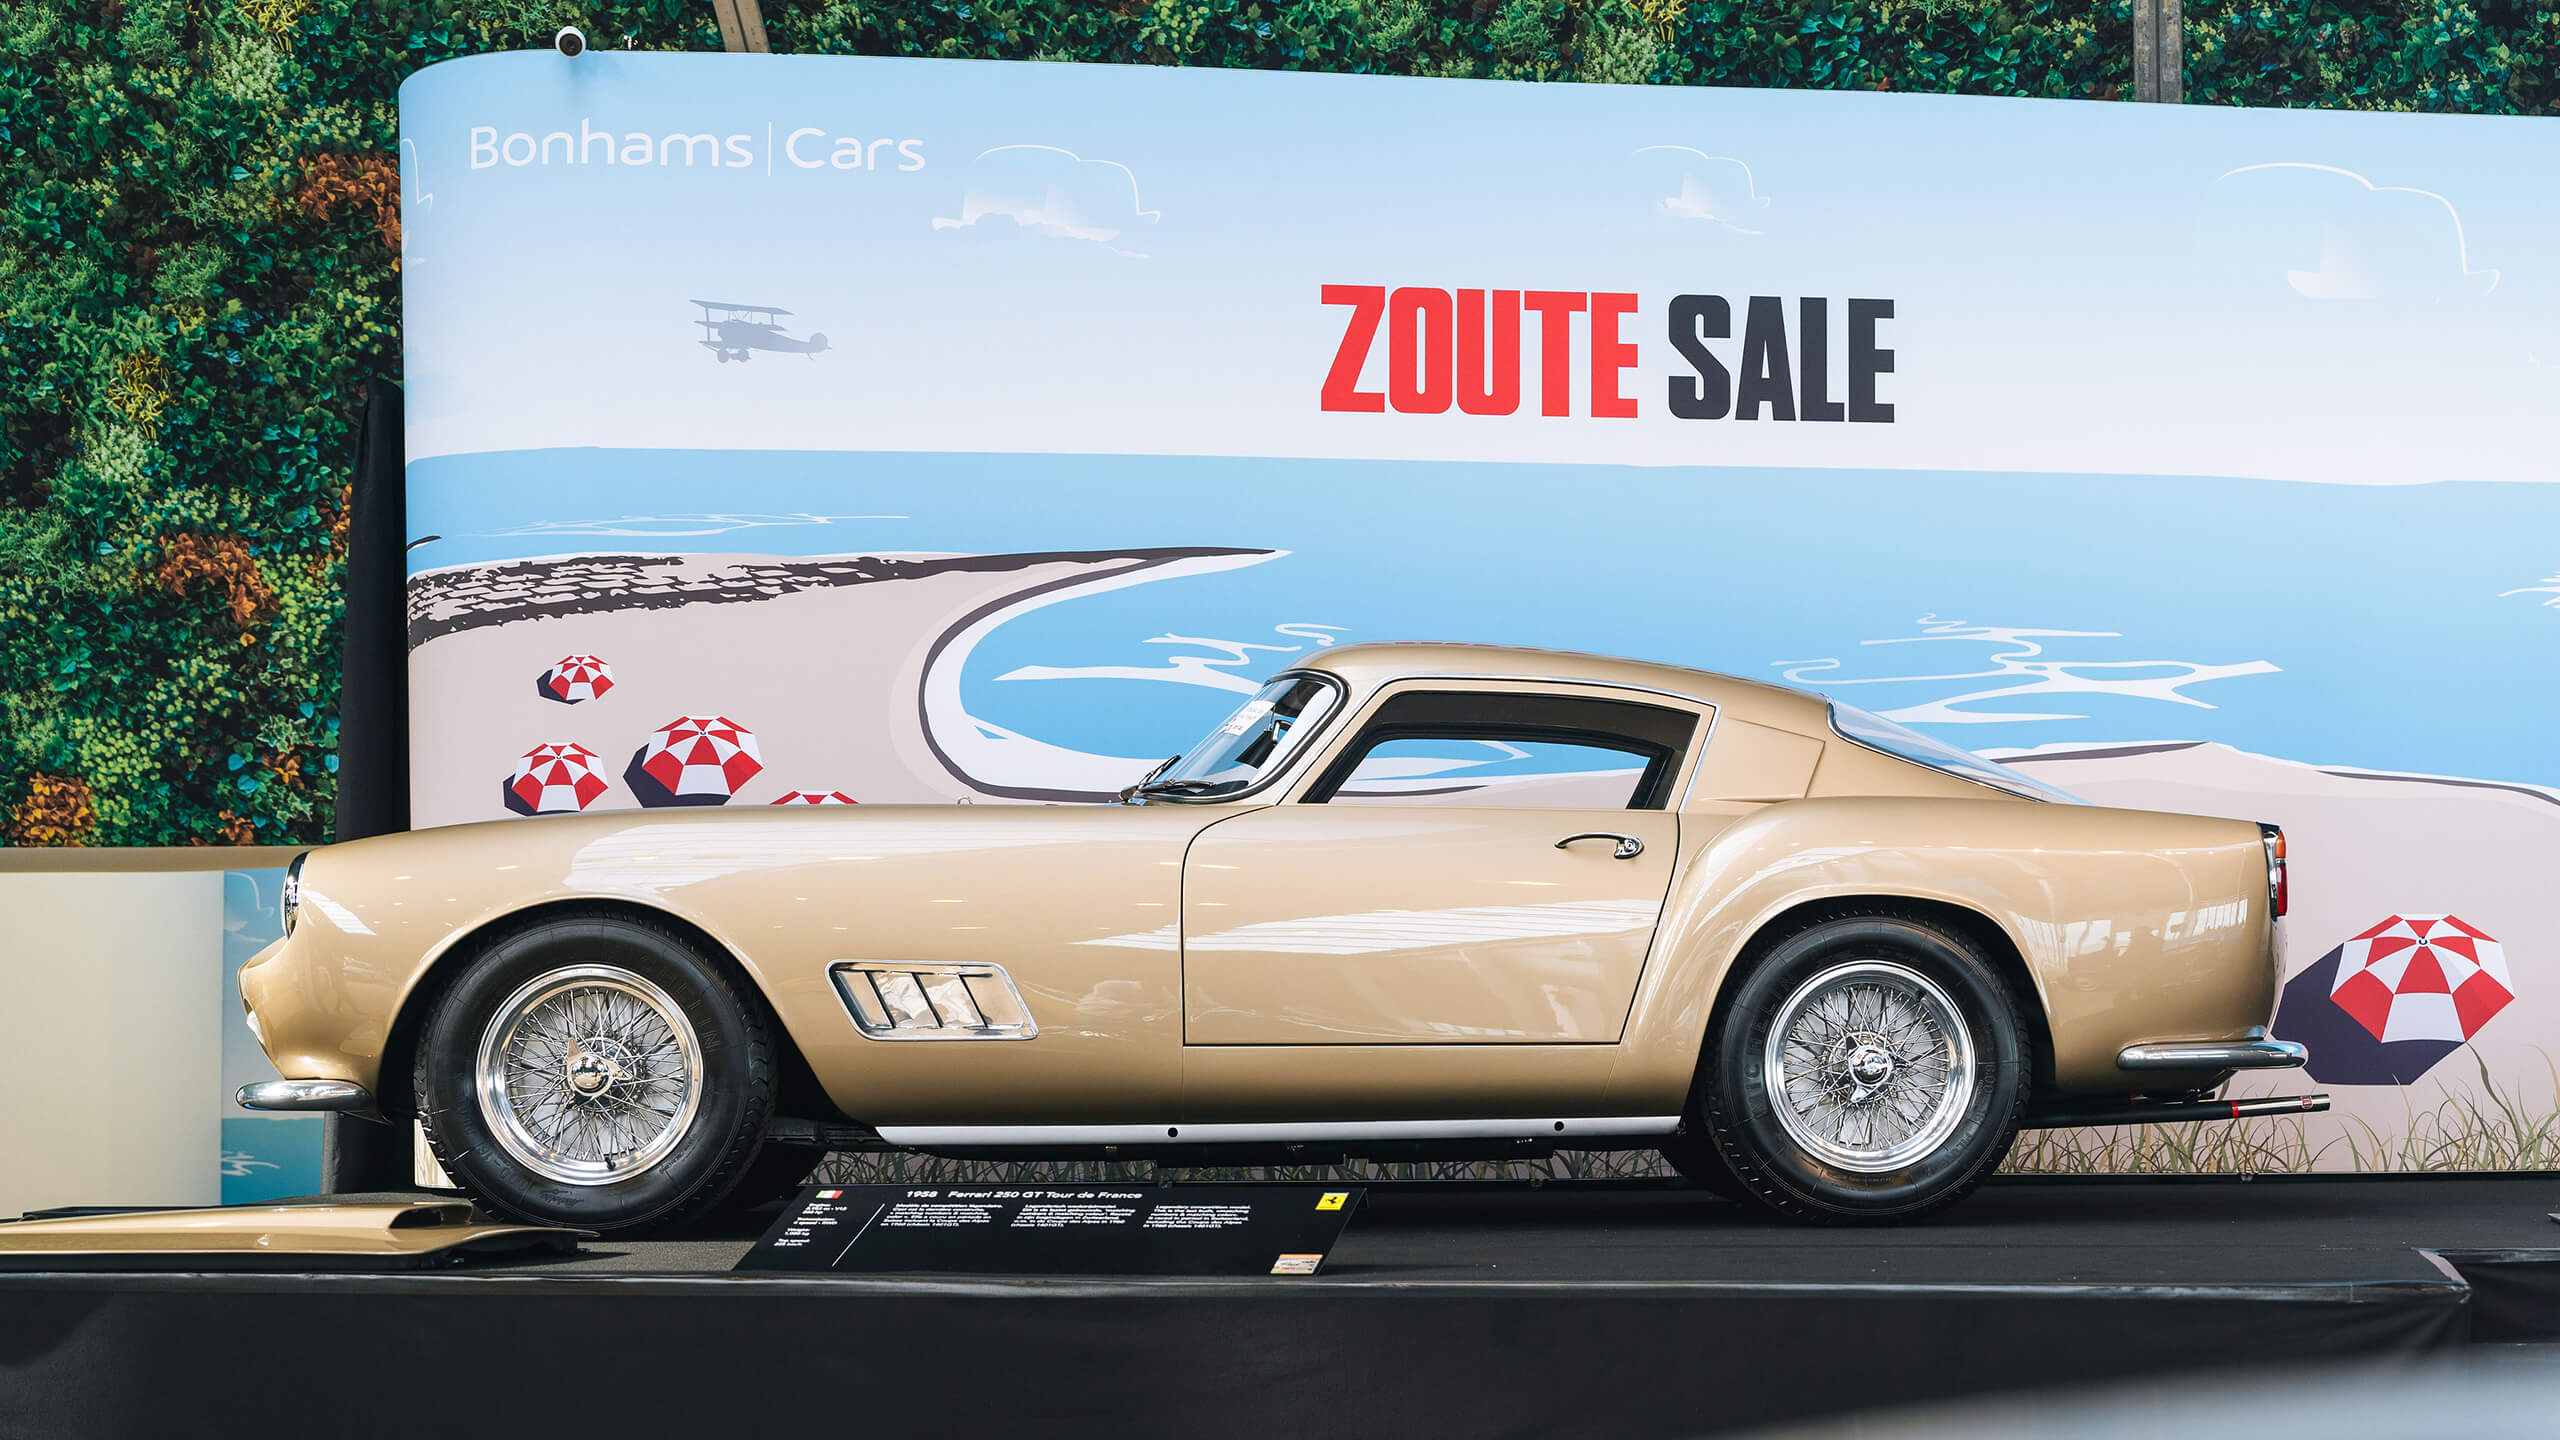 €26.8m gross: Bonhams’ best-ever Zoute Grand Prix auction